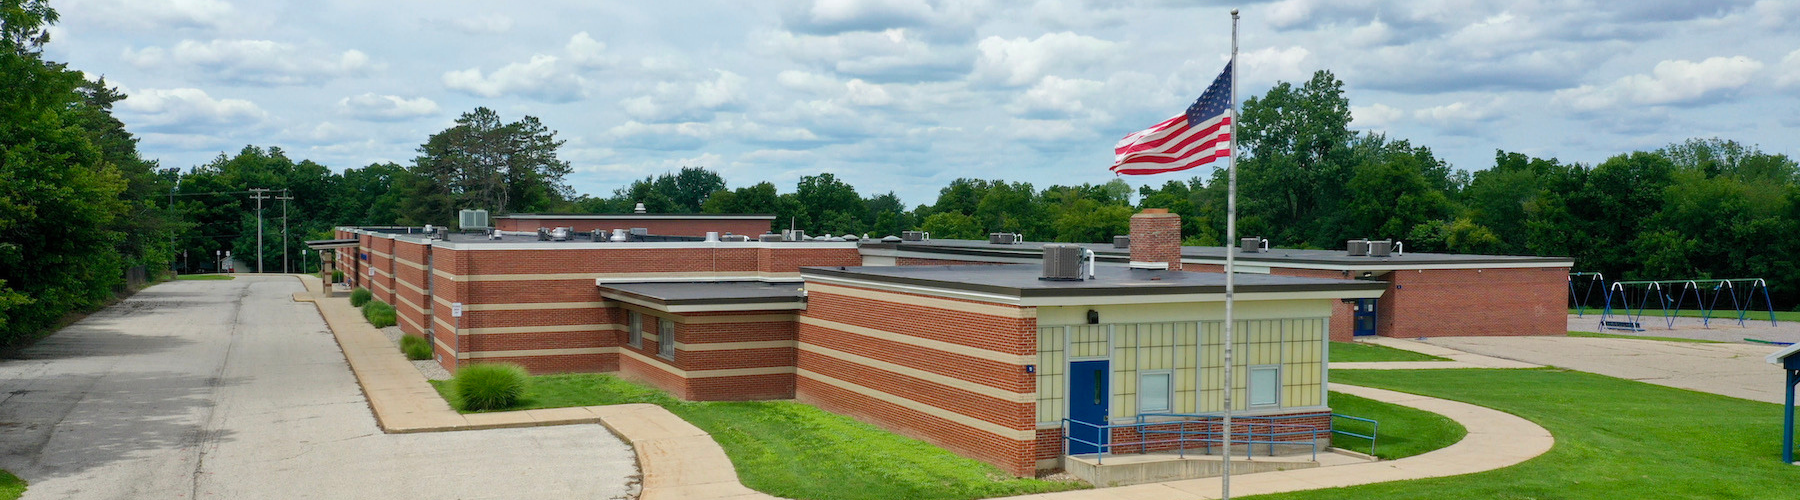 Maplewood Elementary School - Flag